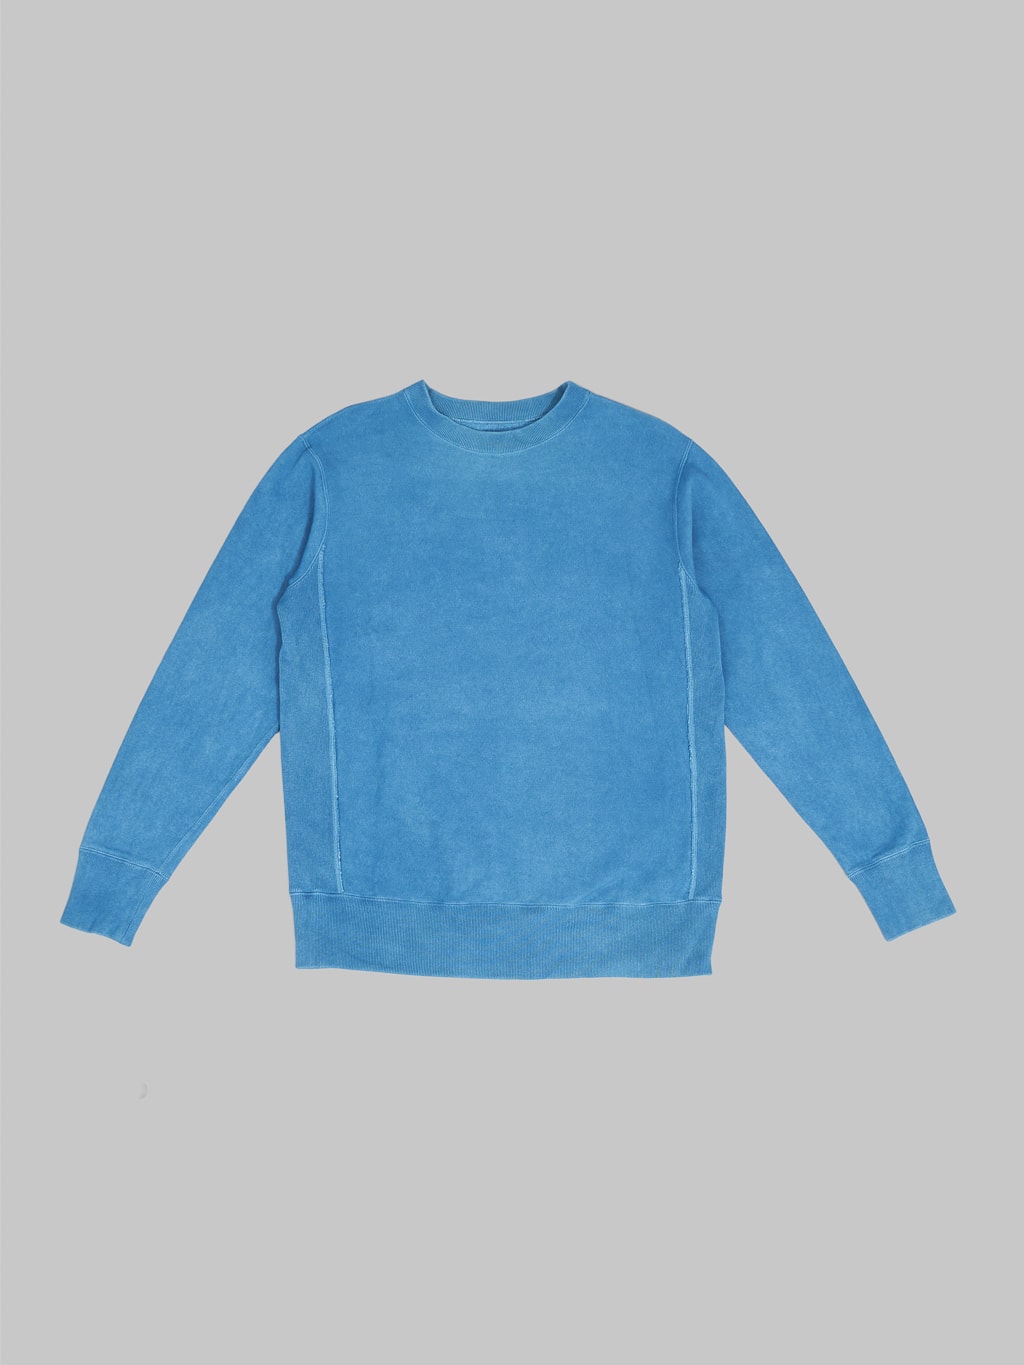 Studio D'Artisan 8122  "AWA-AI" Natural Indigo Reverse Weave Sweatshirt